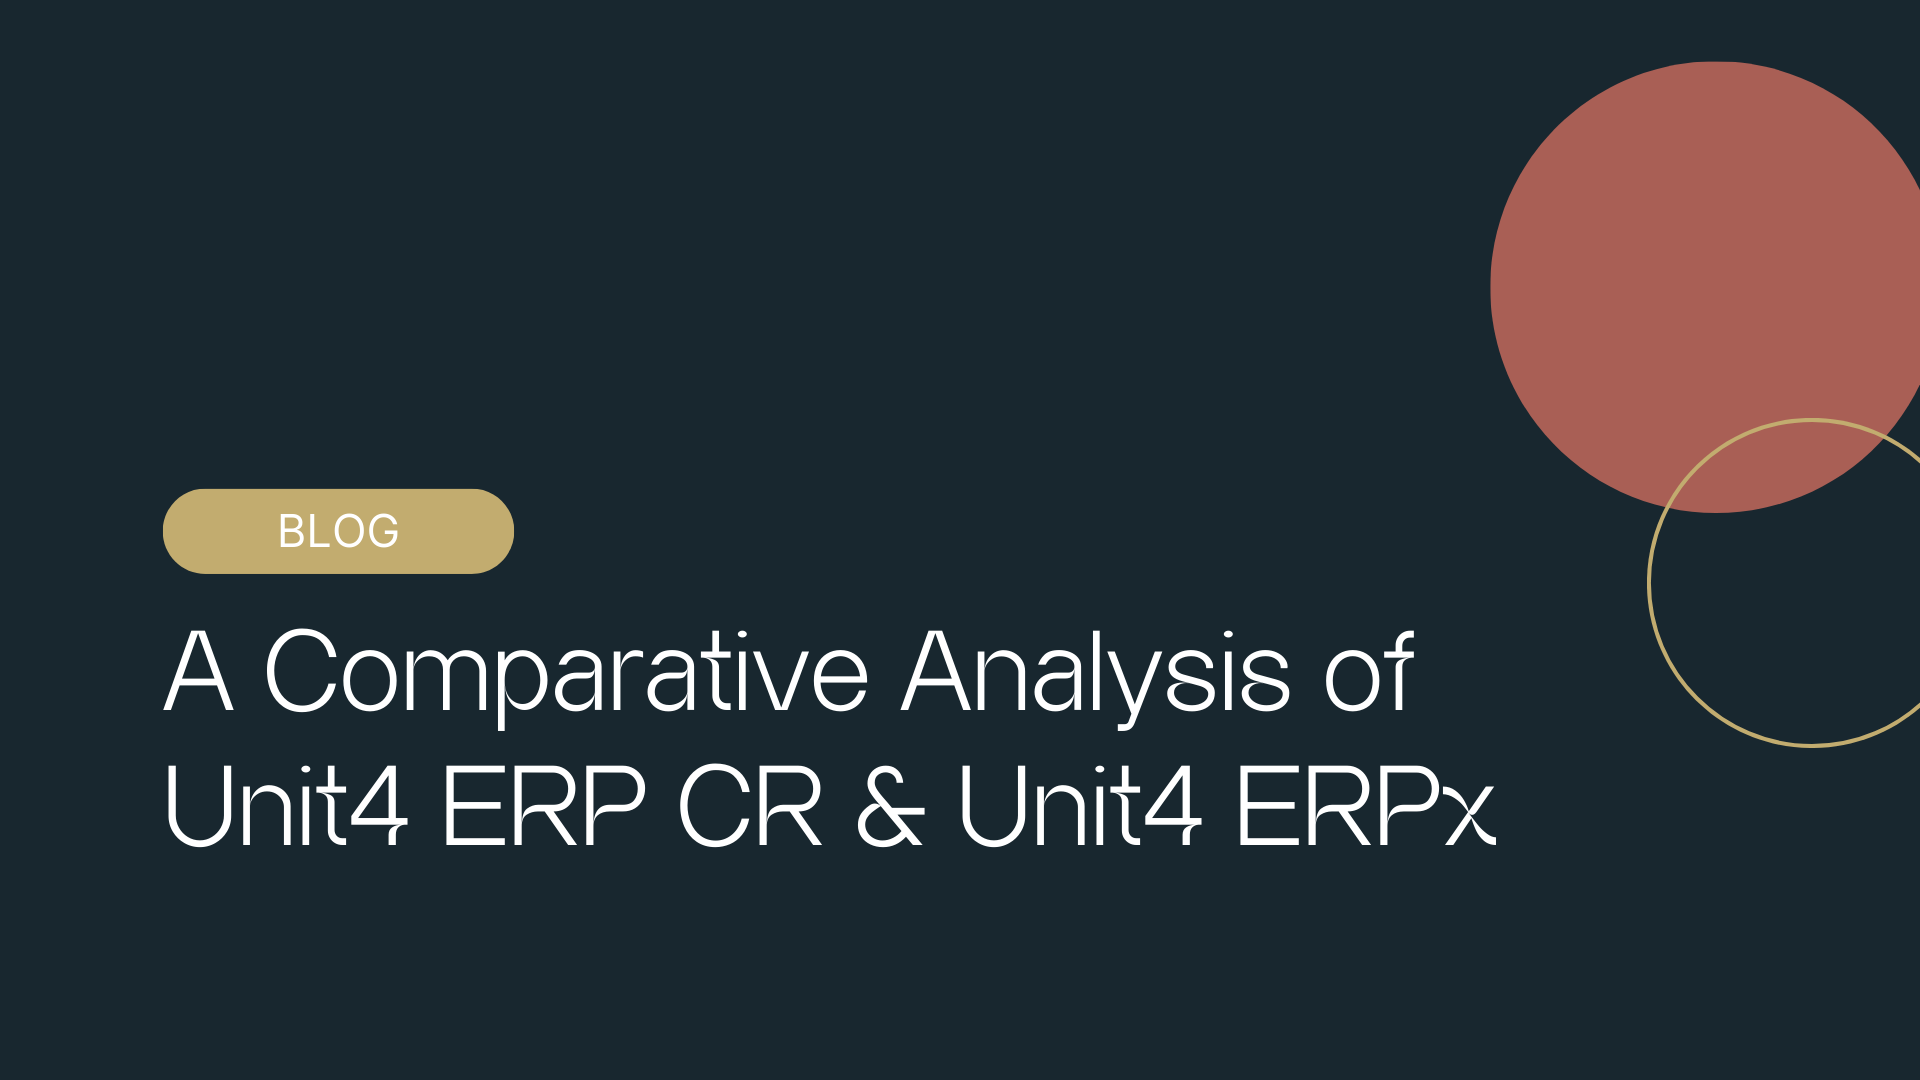 Unit4 ERP CR